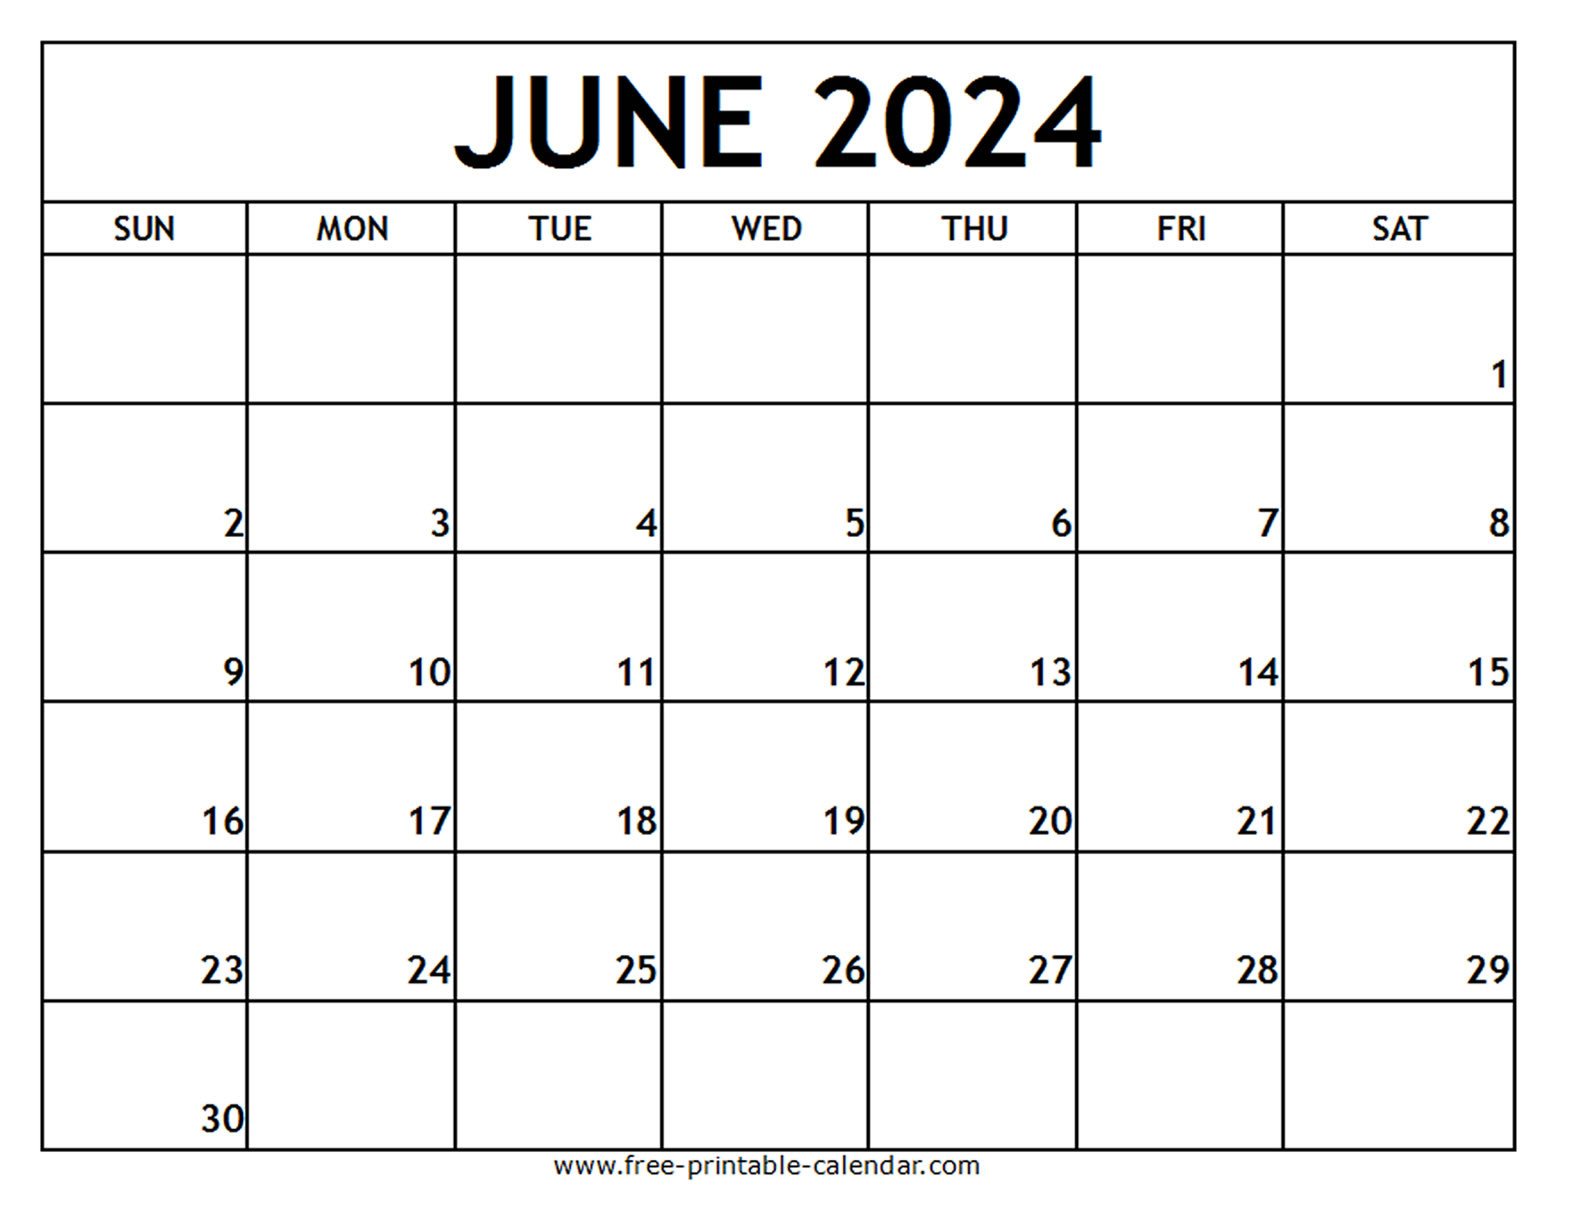 June 2024 Printable Calendar - Free-Printable-Calendar with regard to June 2024 Calendar Page